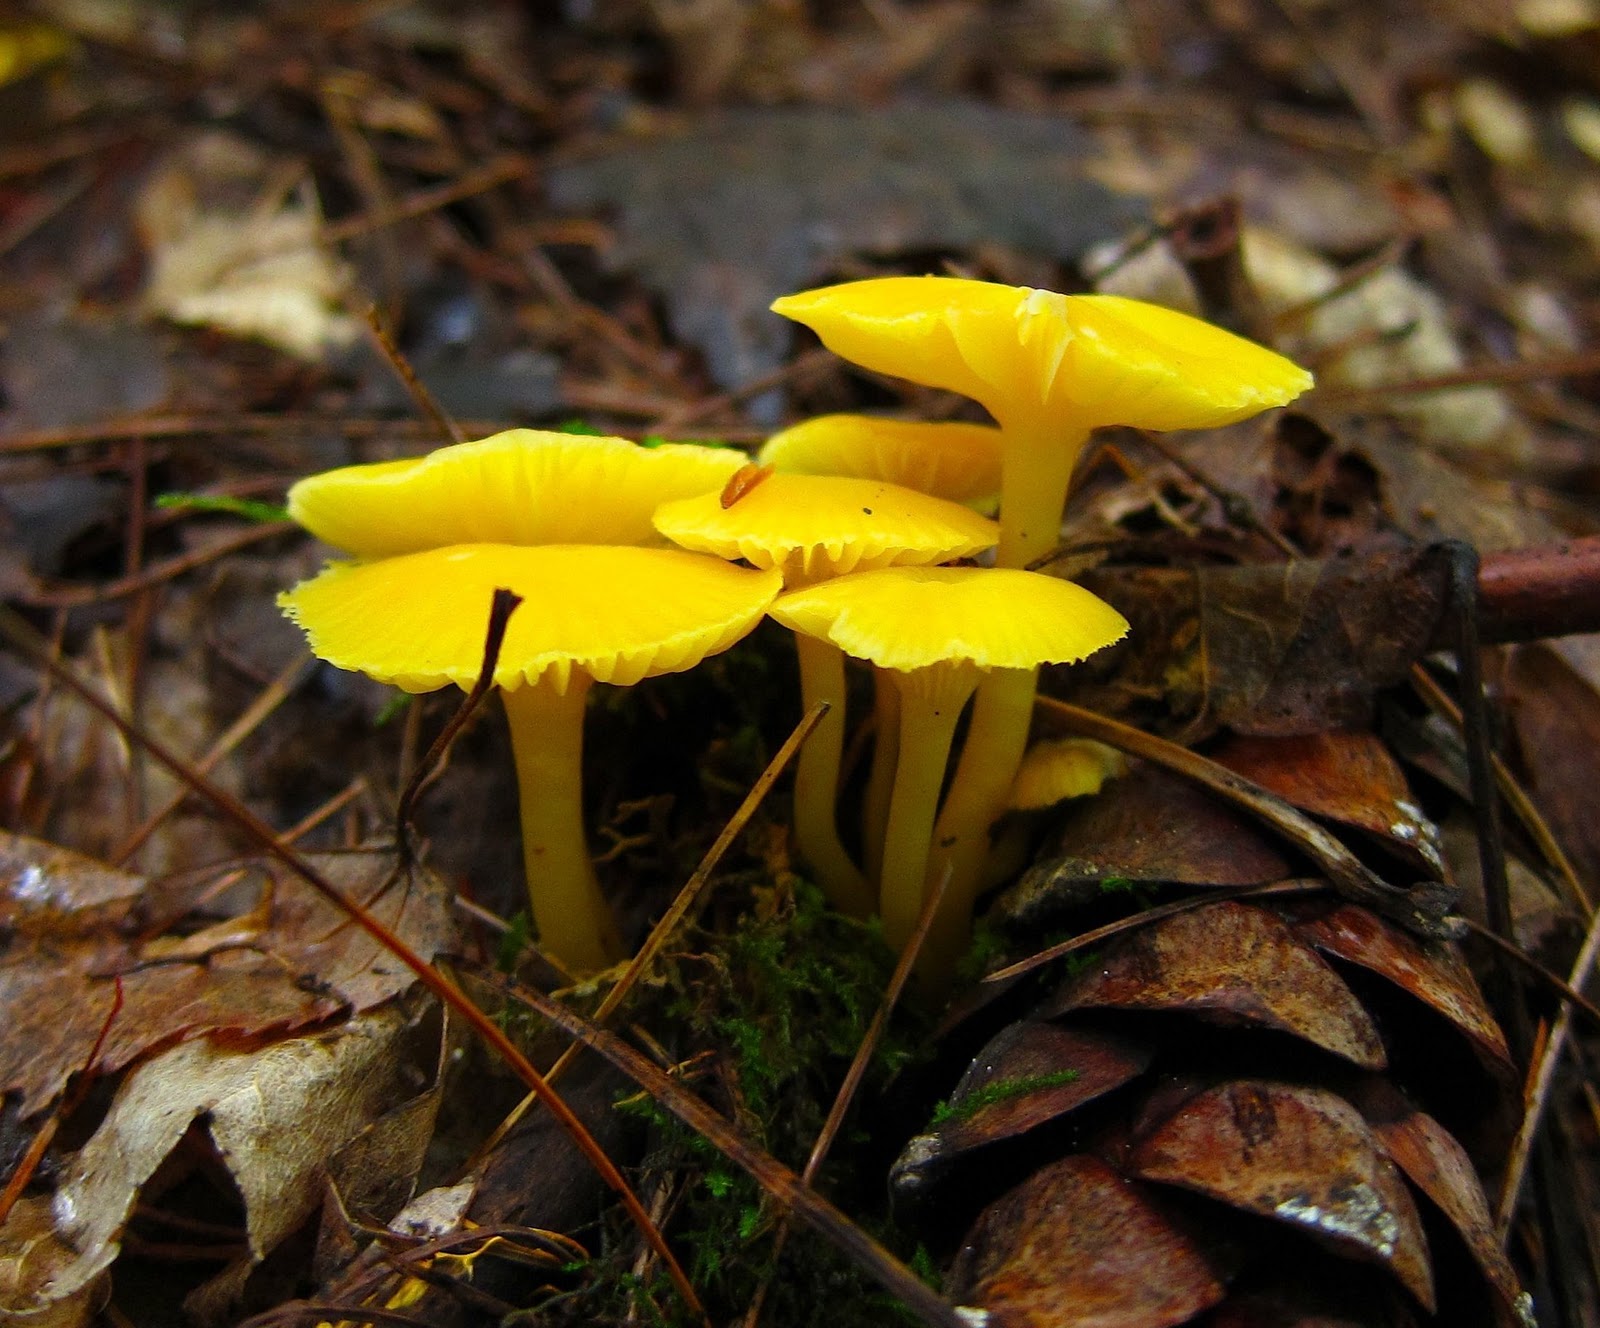 Saratoga woods and waterways: More Moreau Mushrooms